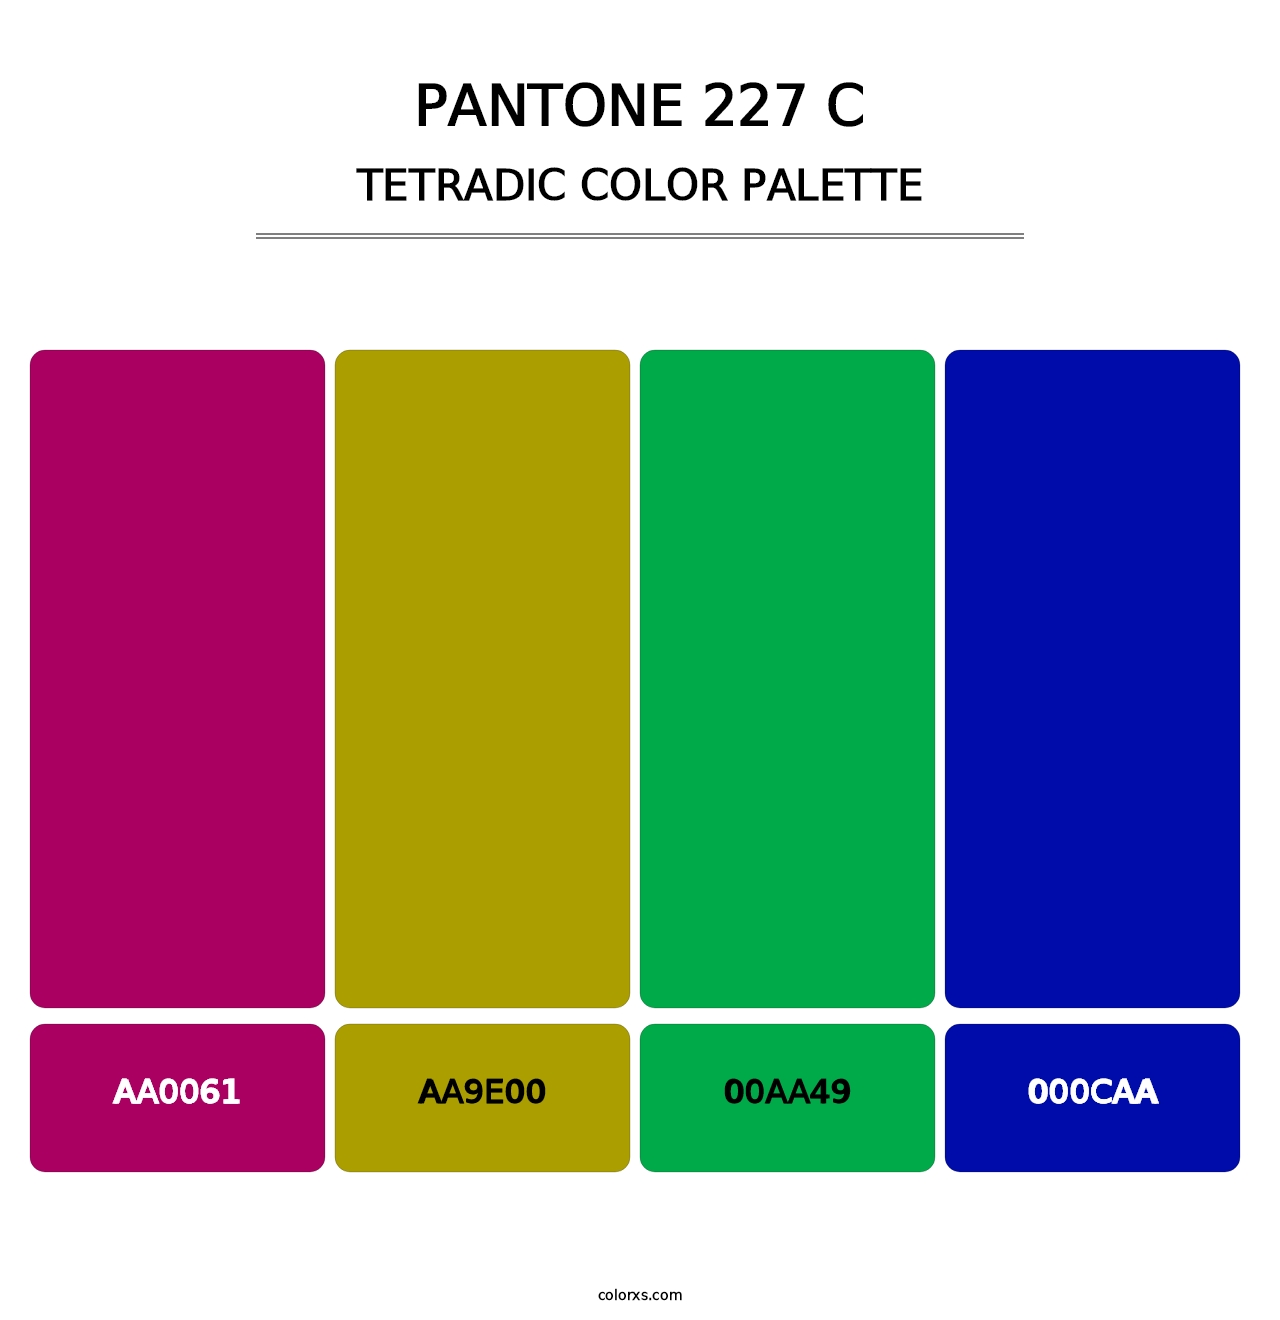 PANTONE 227 C - Tetradic Color Palette